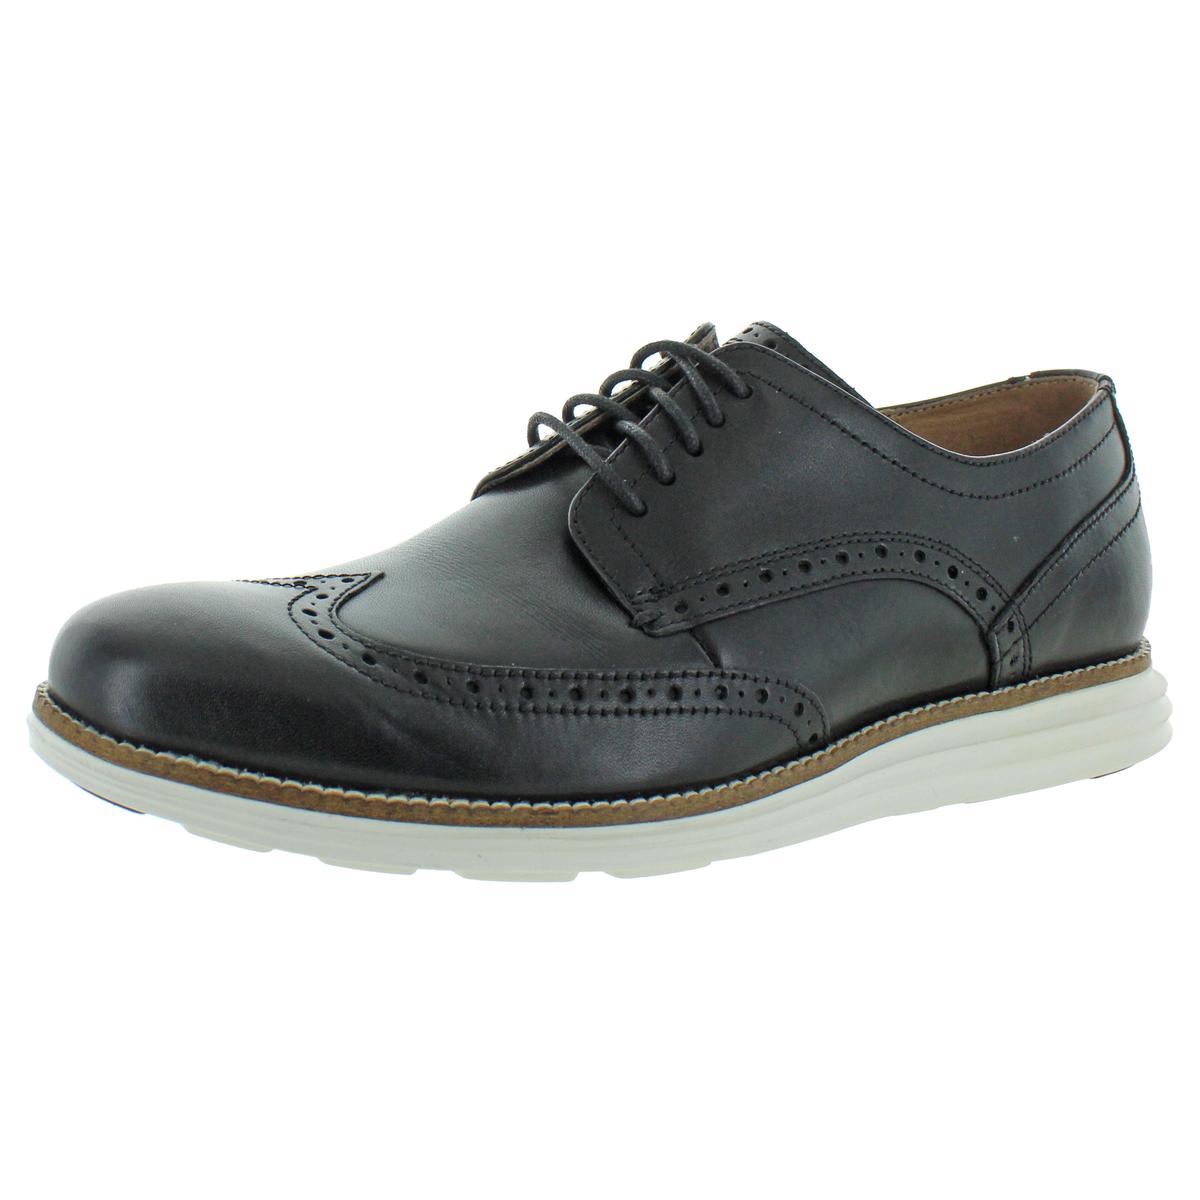 Cole Haan Mens OriginalGrand B/W Leather Oxfords Shoes 8 Medium (D ...